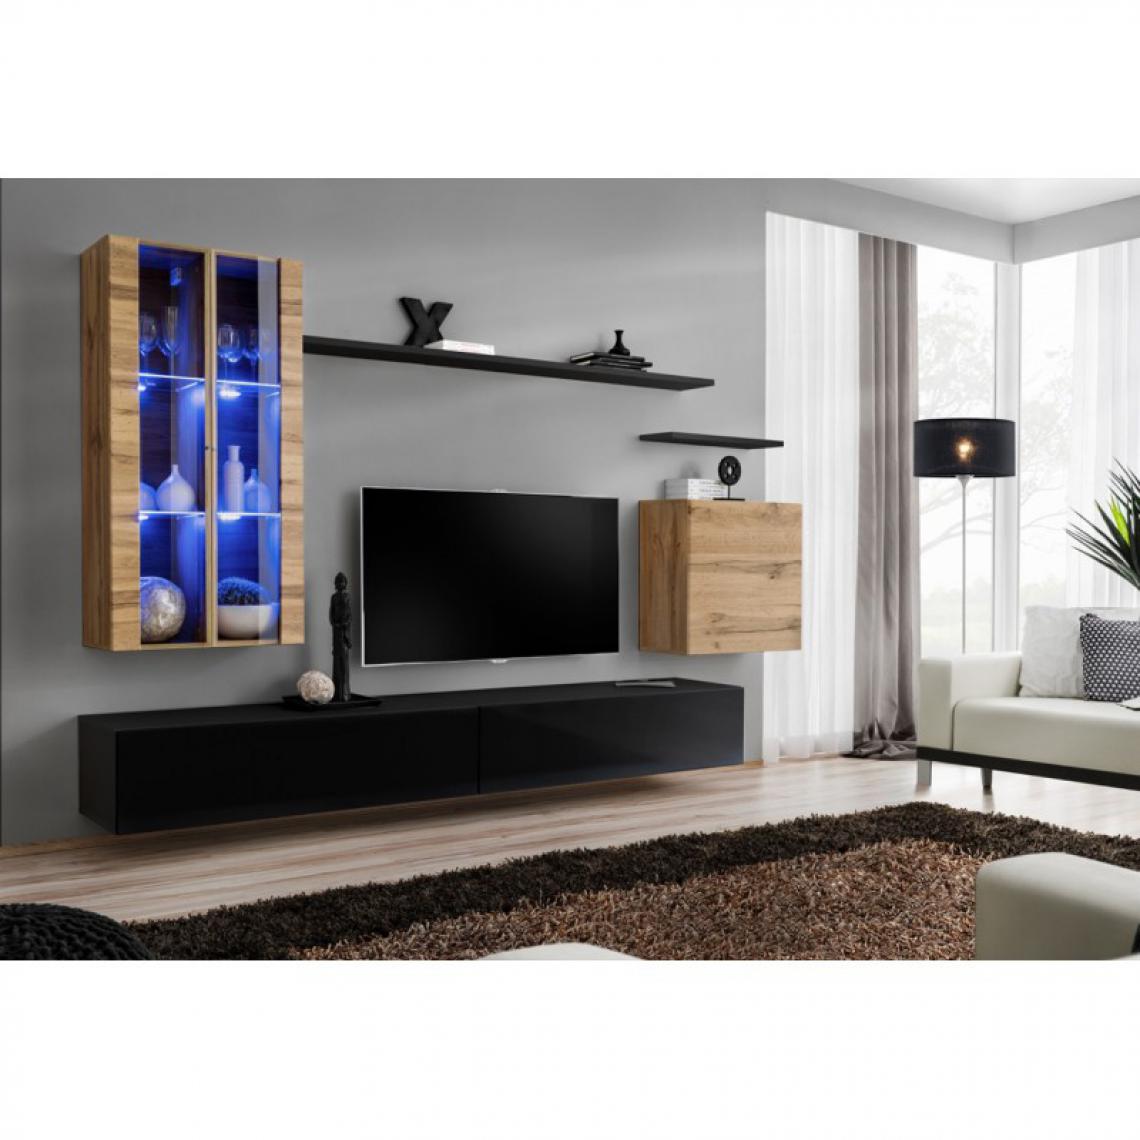 Ac-Deco - Meuble TV Mural Design Switch XII 270cm Naturel & Noir - Meubles TV, Hi-Fi